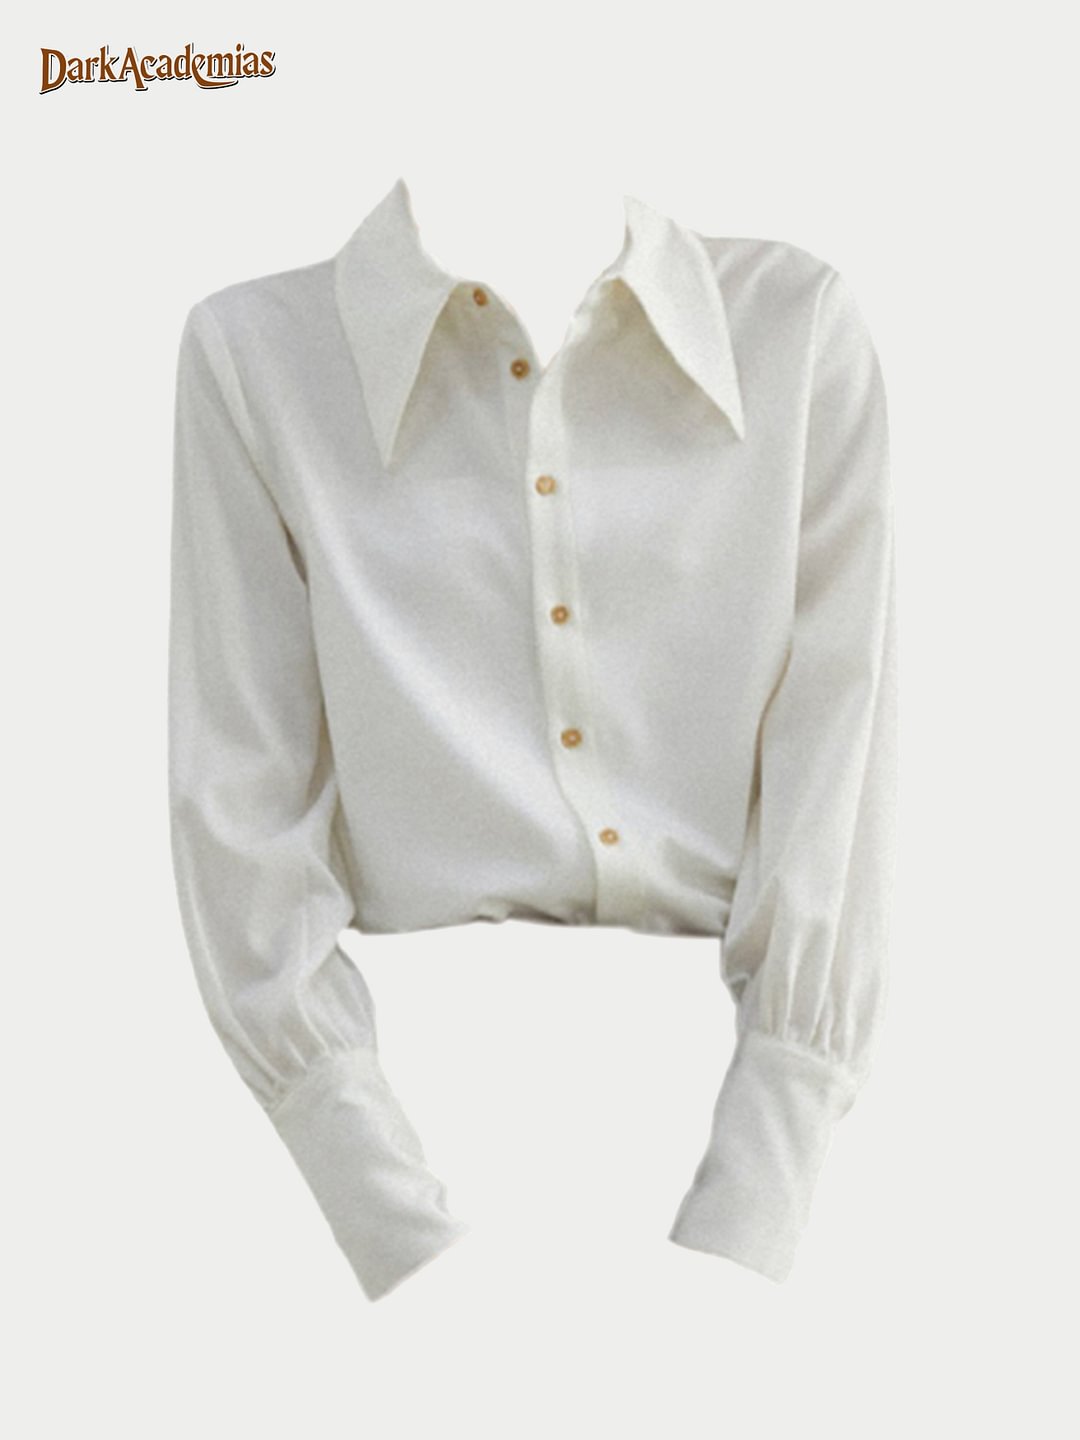 Darkacademias White Preppy Style Pointed Collar Shirt